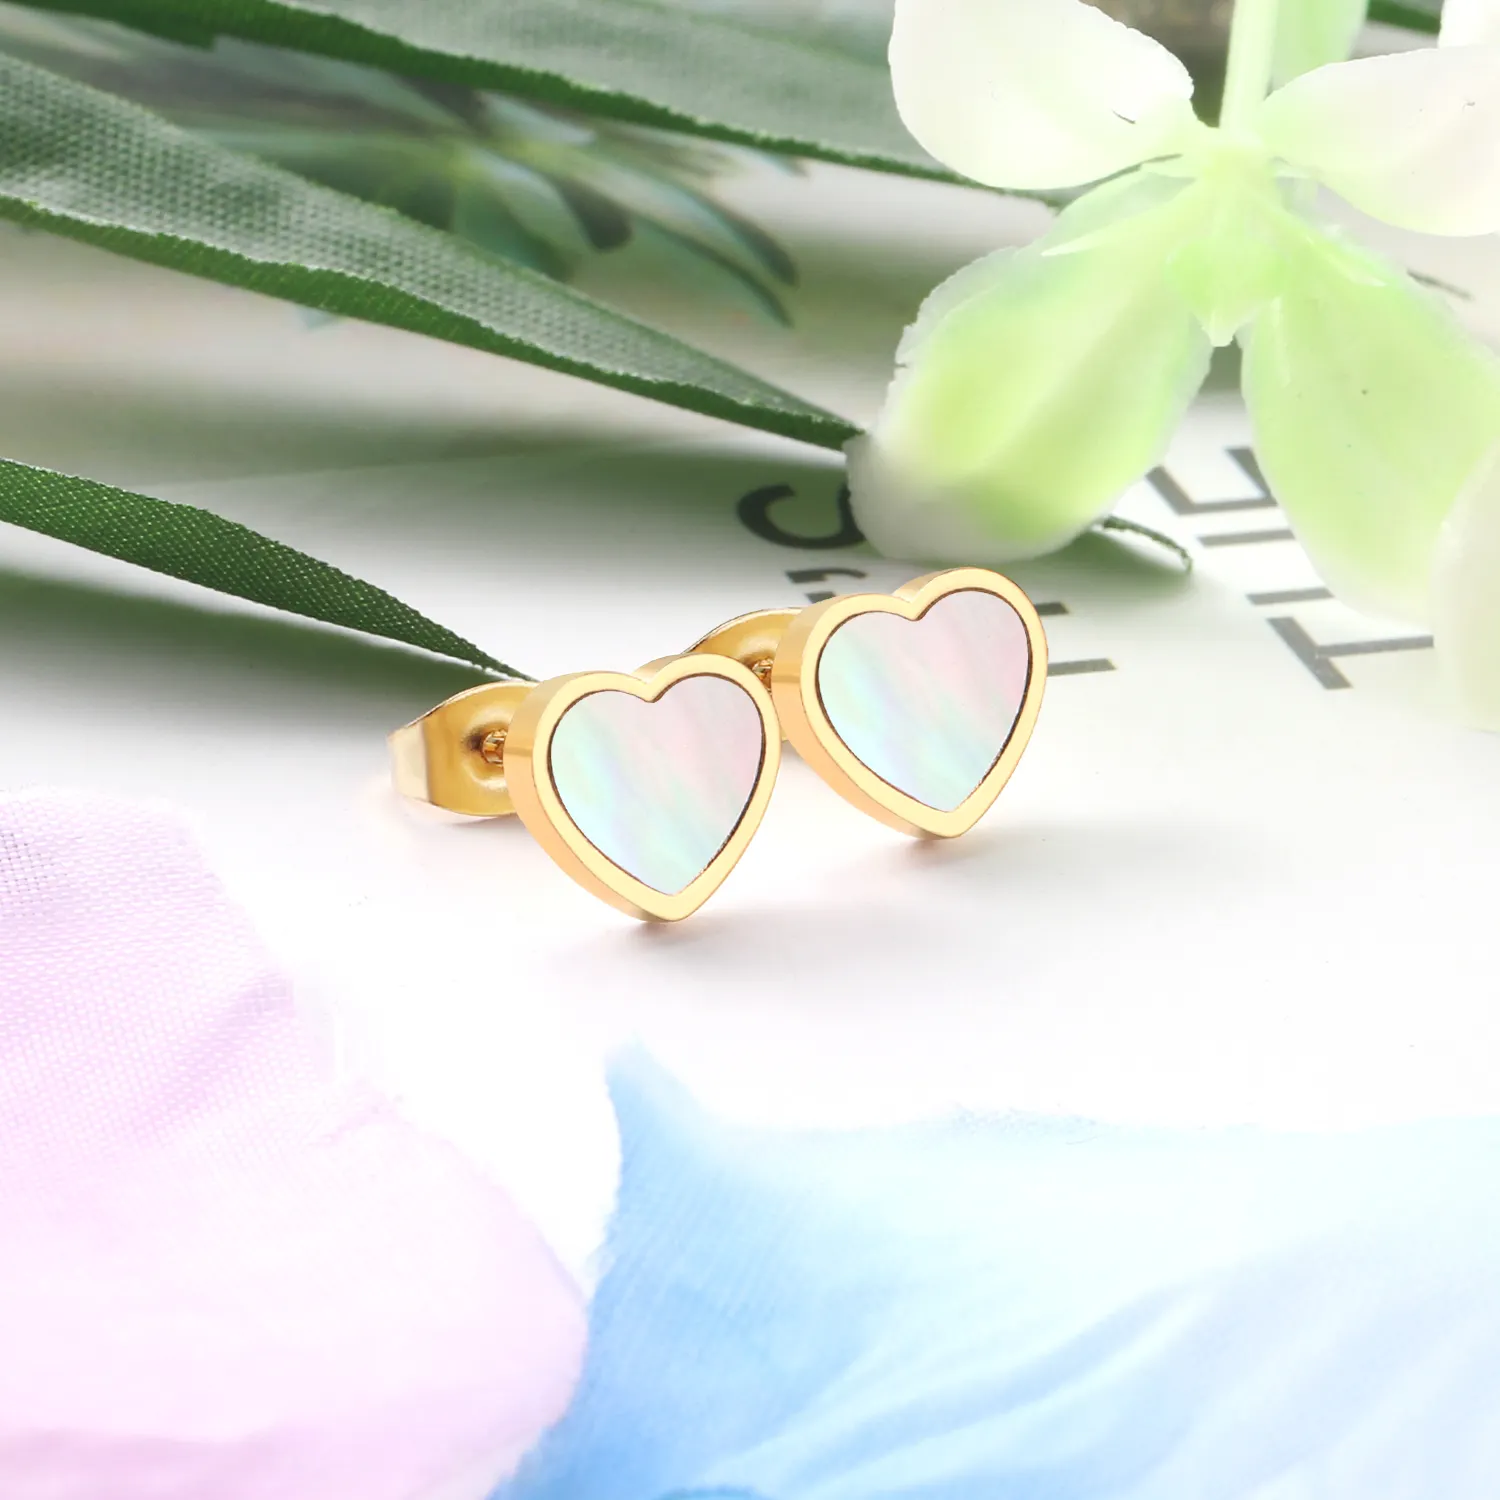 Classic Cute Stainless Steel Stud Earrings Jewelry For Women 18K Gold Plated Heart White Shell Earrings